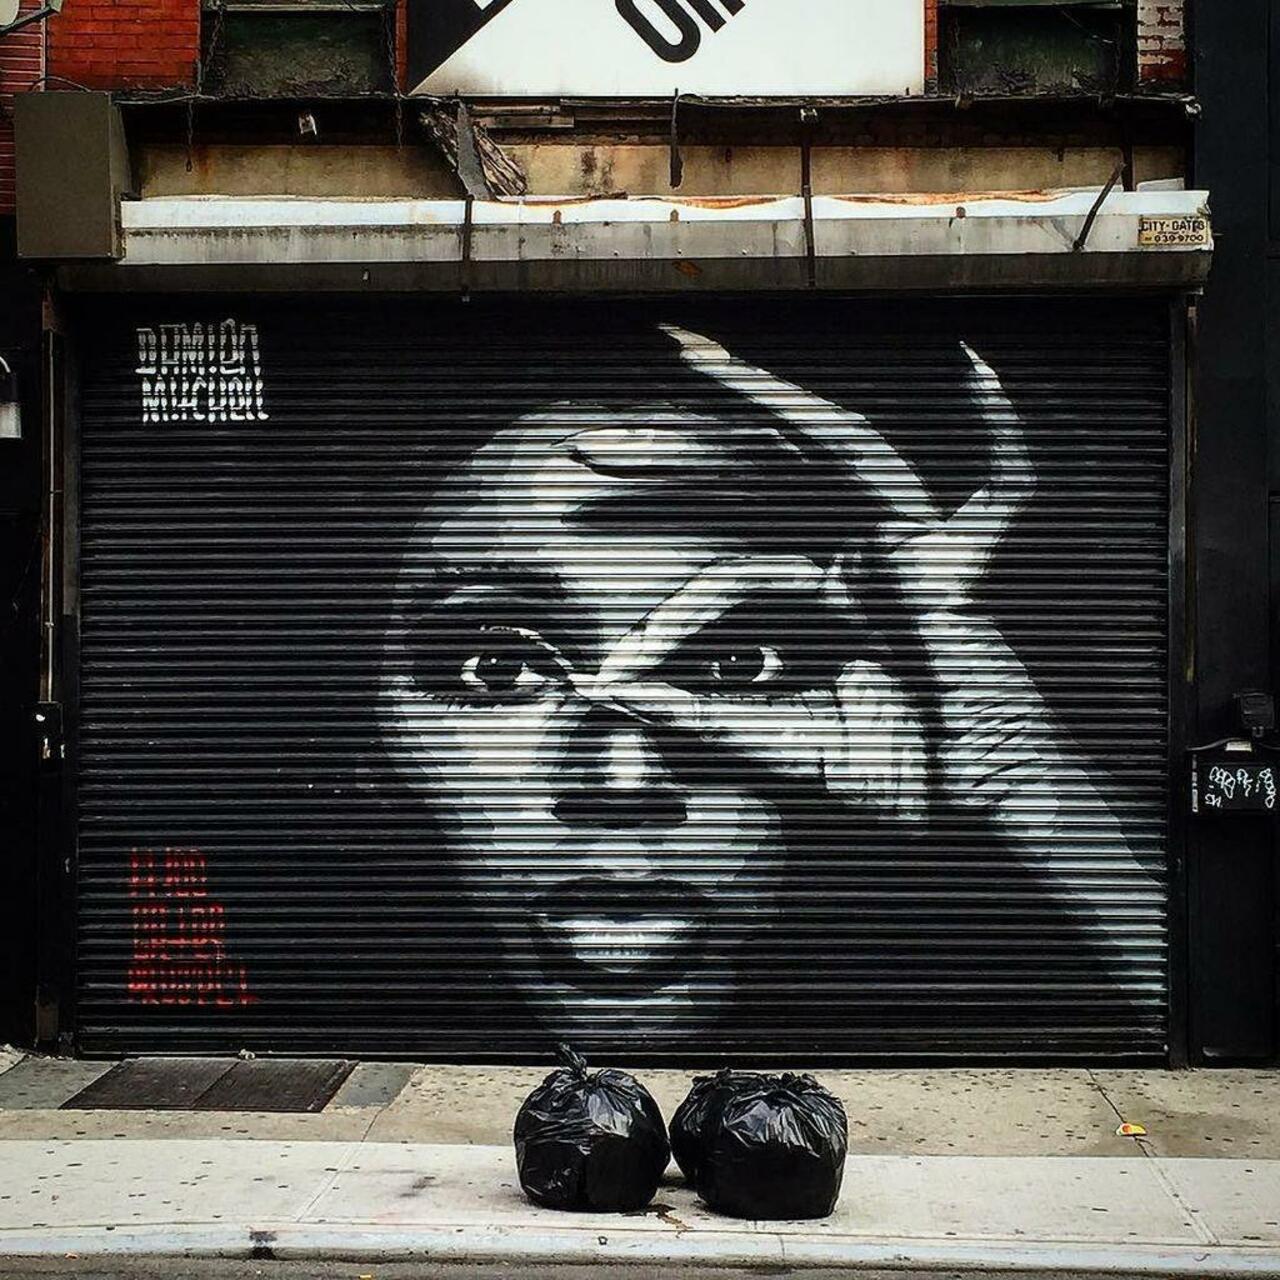 RT @StArtEverywhere: Lower East Side shutters... #graffiti #stencilart #art #streetart #wallporn #wall #pasteup #mural #urbanwalls #stre… http://t.co/JgkjhA4vaI